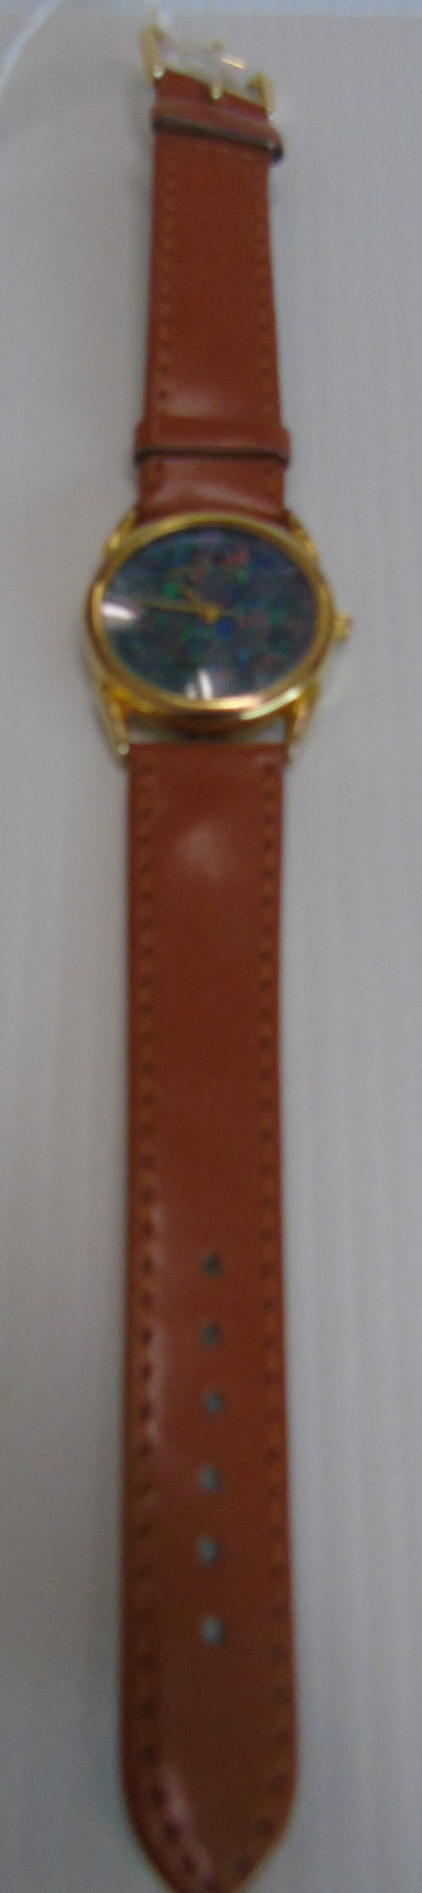 A Jorgen Jensen Opal Faced Wristwatch, in working order according to owner.